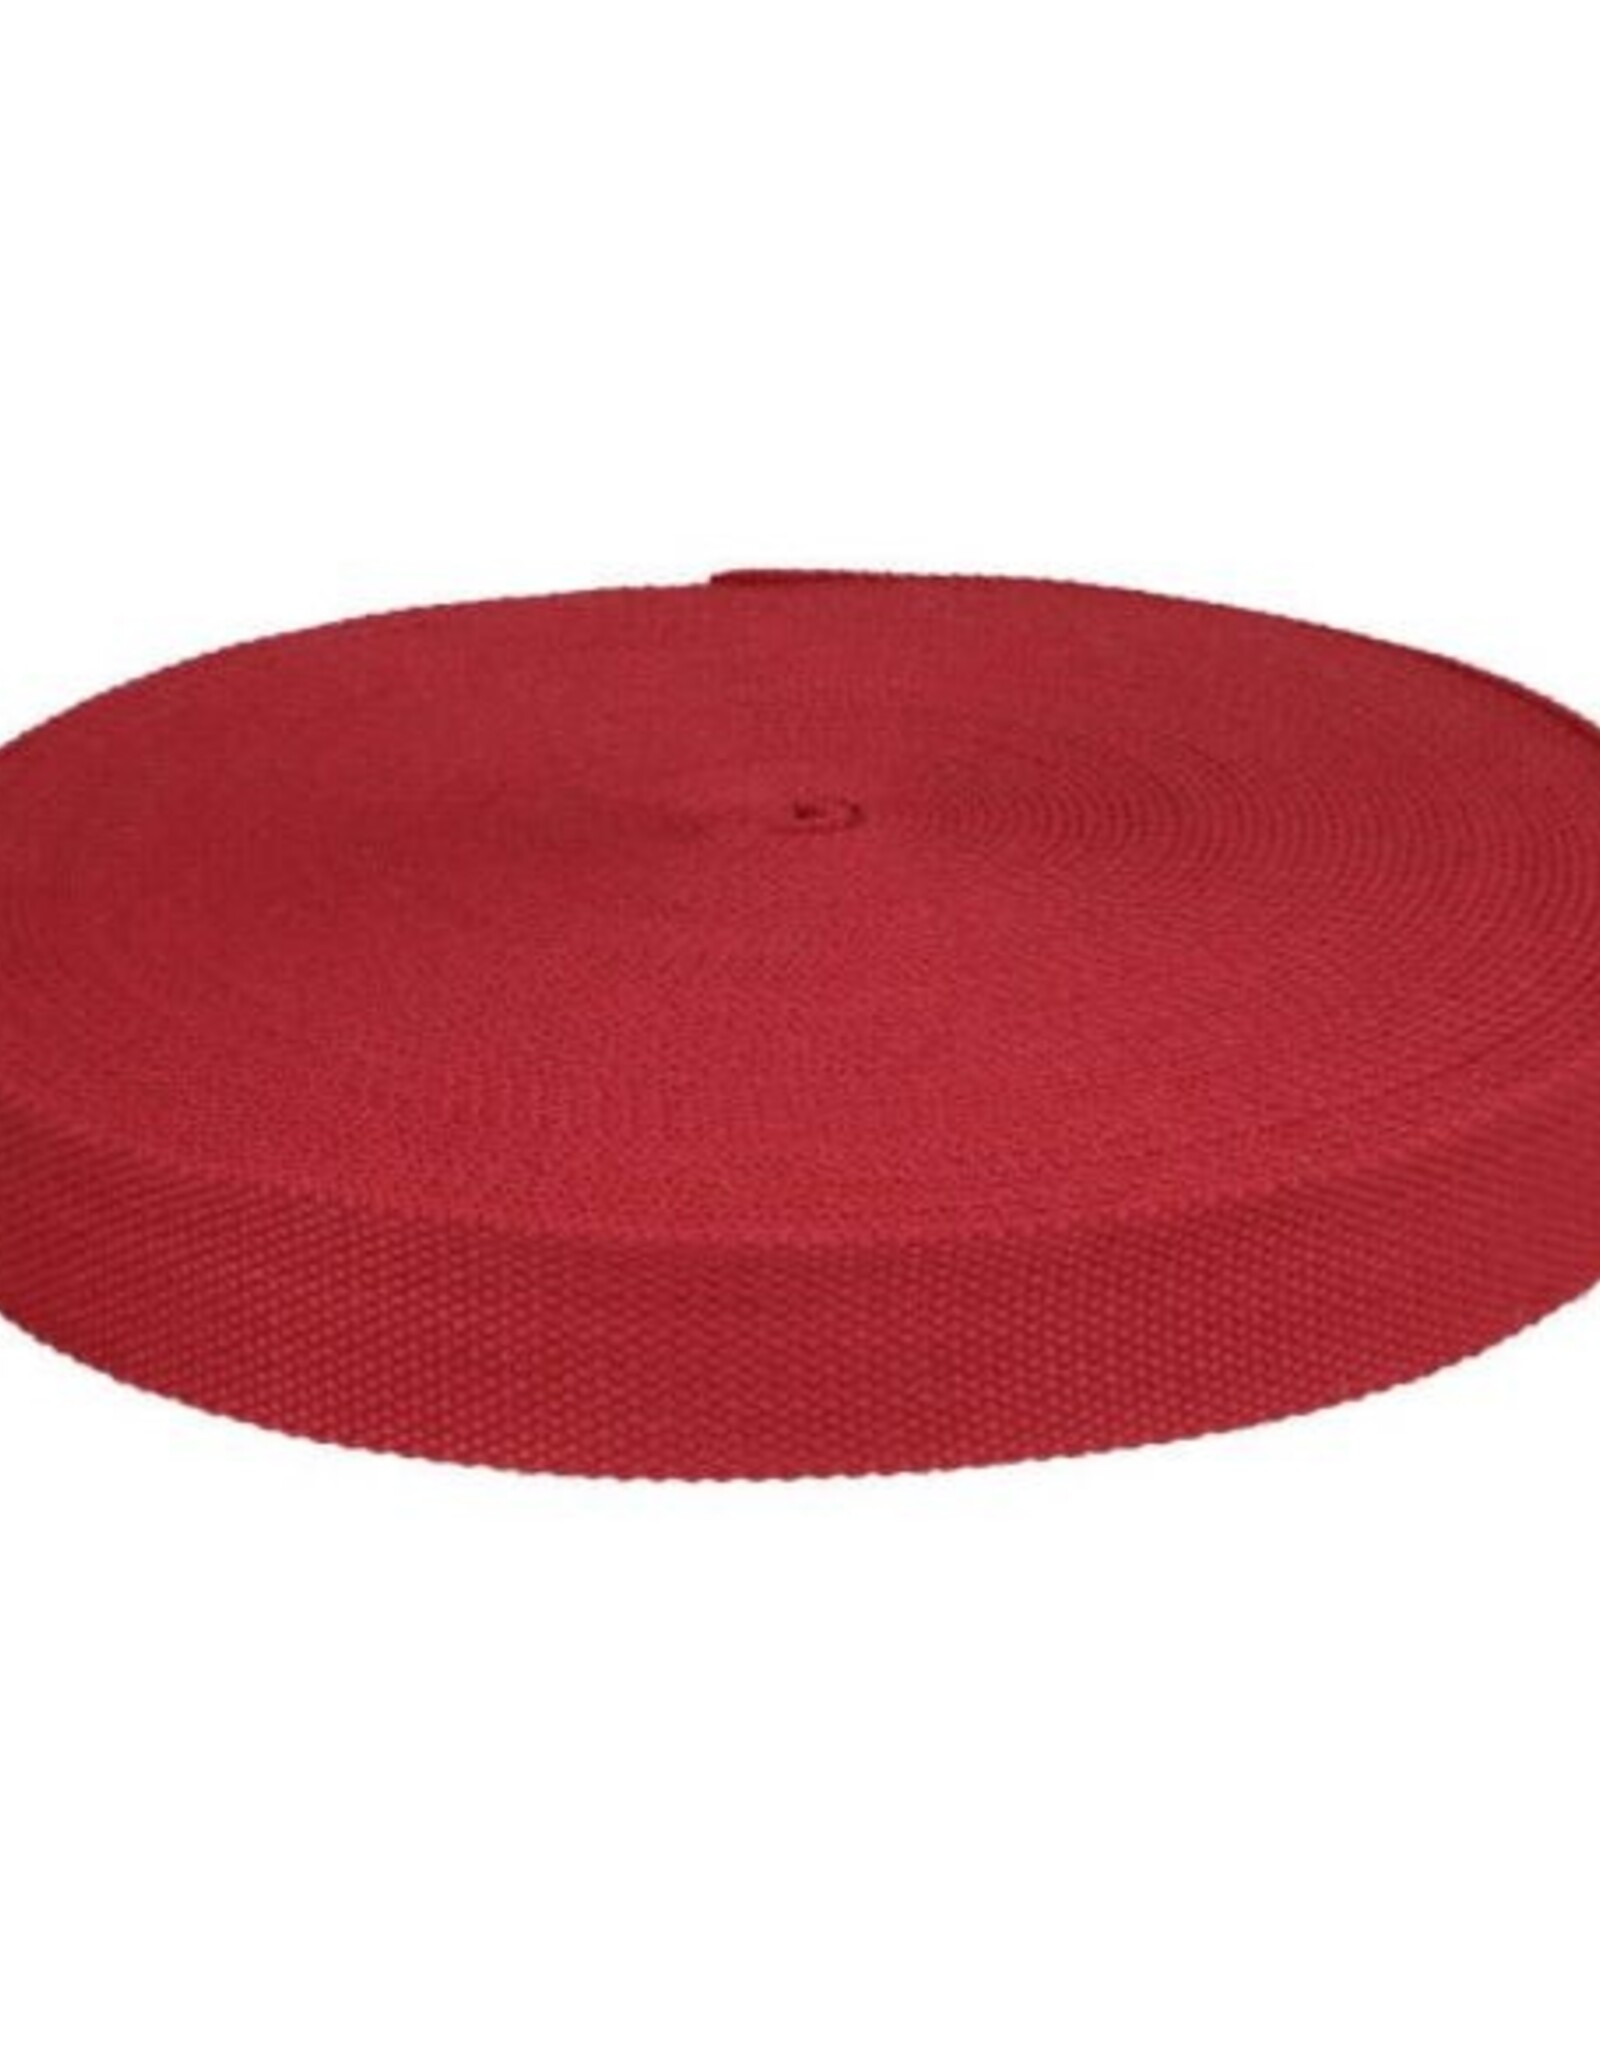 Stoffenschuur selectie Tassenband katoen 25mm bordeau - rood